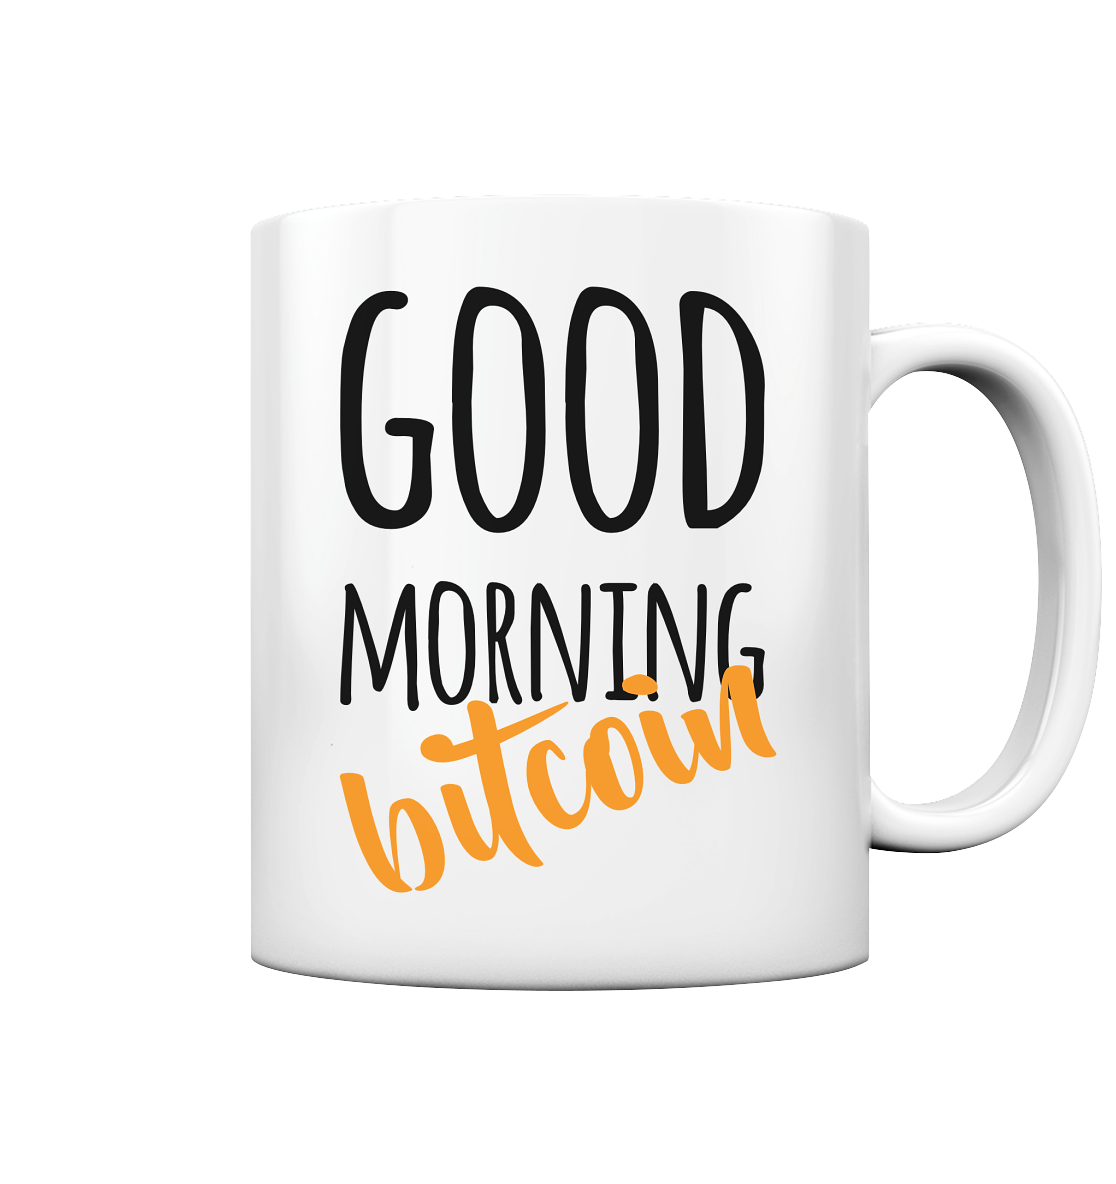 Bitcoin Tasse - good morning bitcoin - typo 1 - Tasse glossy